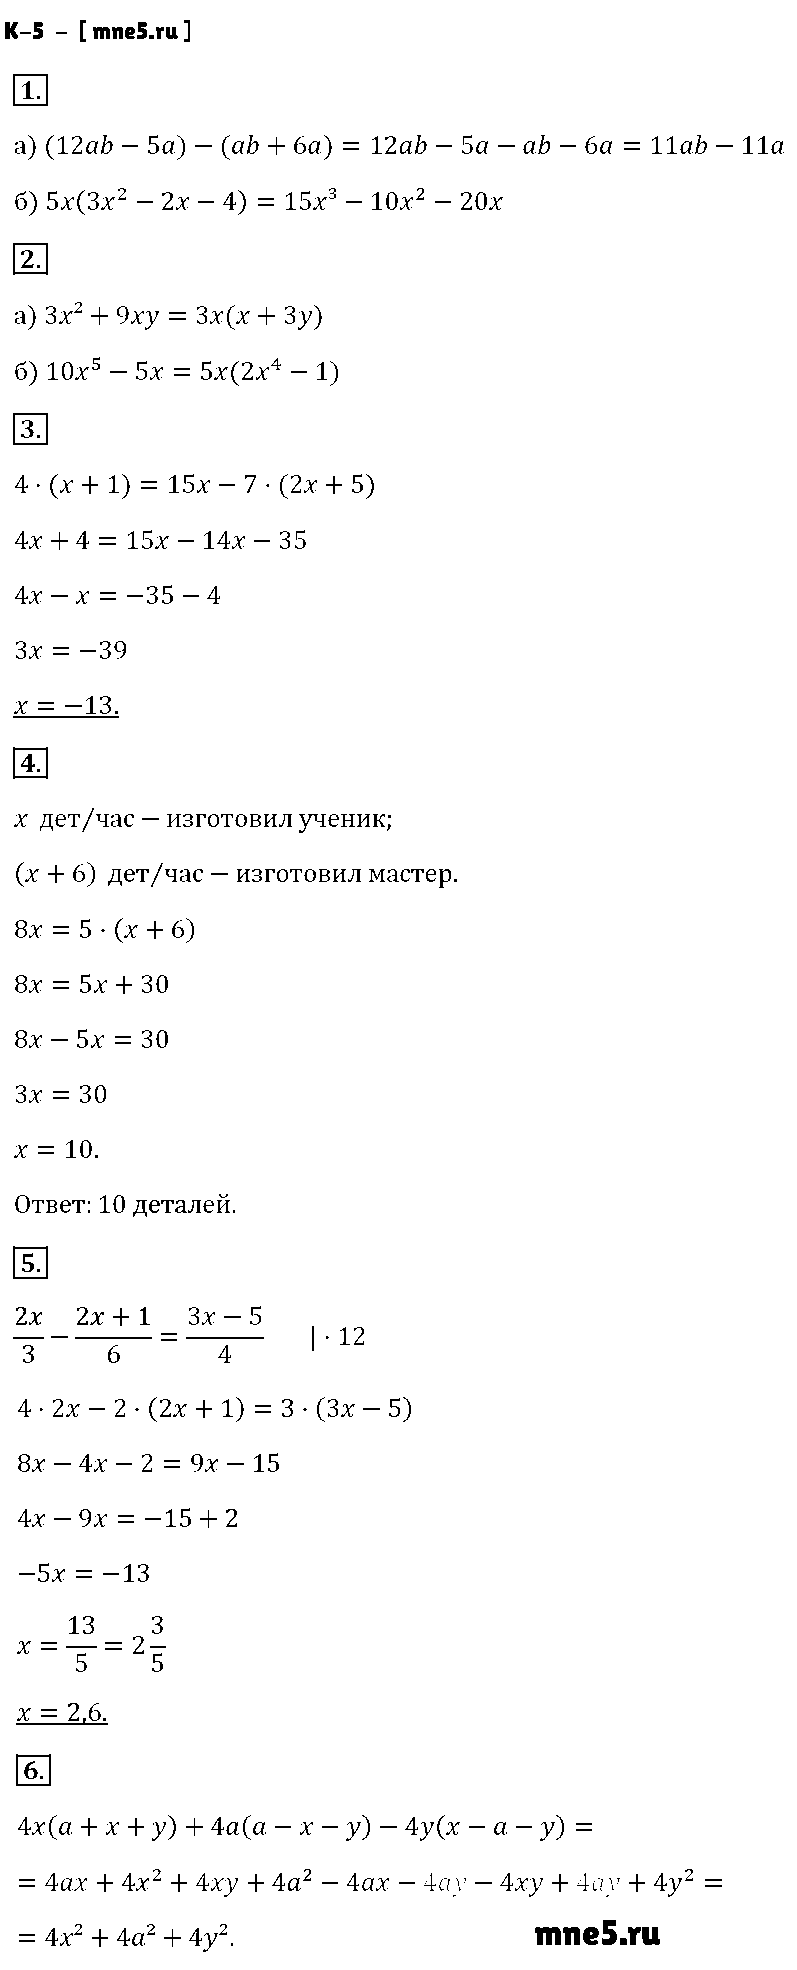 ГДЗ Алгебра 7 класс - К-5